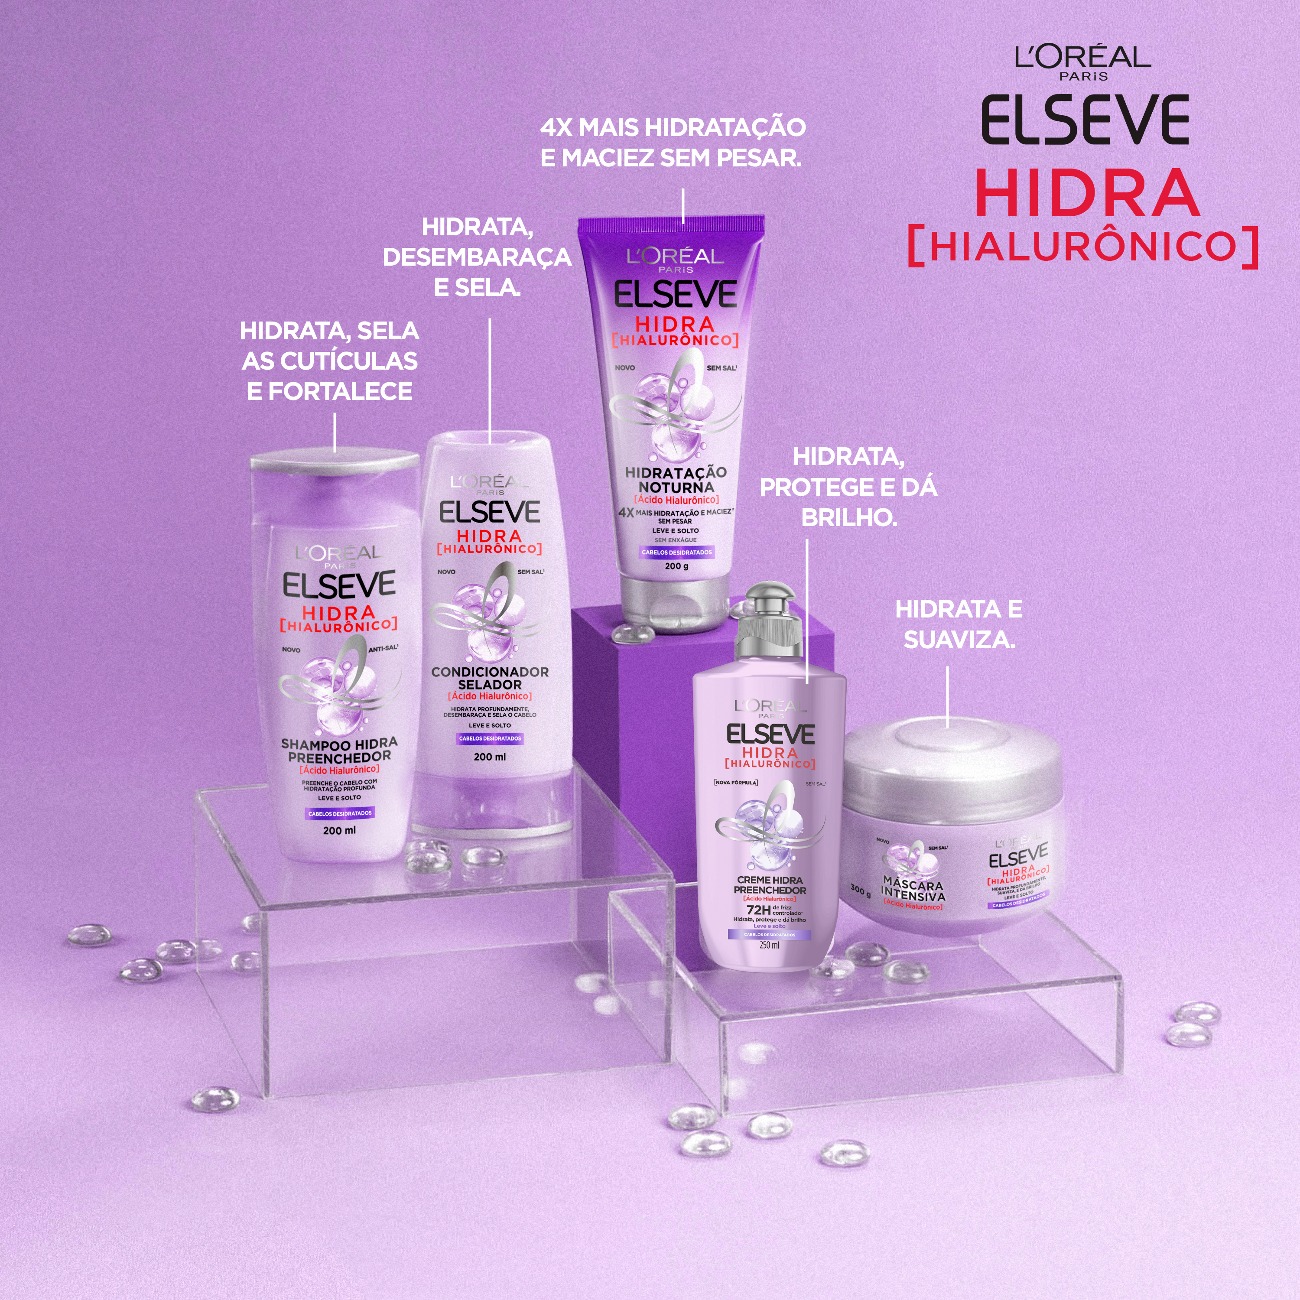 Shampoo Preenchedor Elseve Hidra Hialurnico 400mL